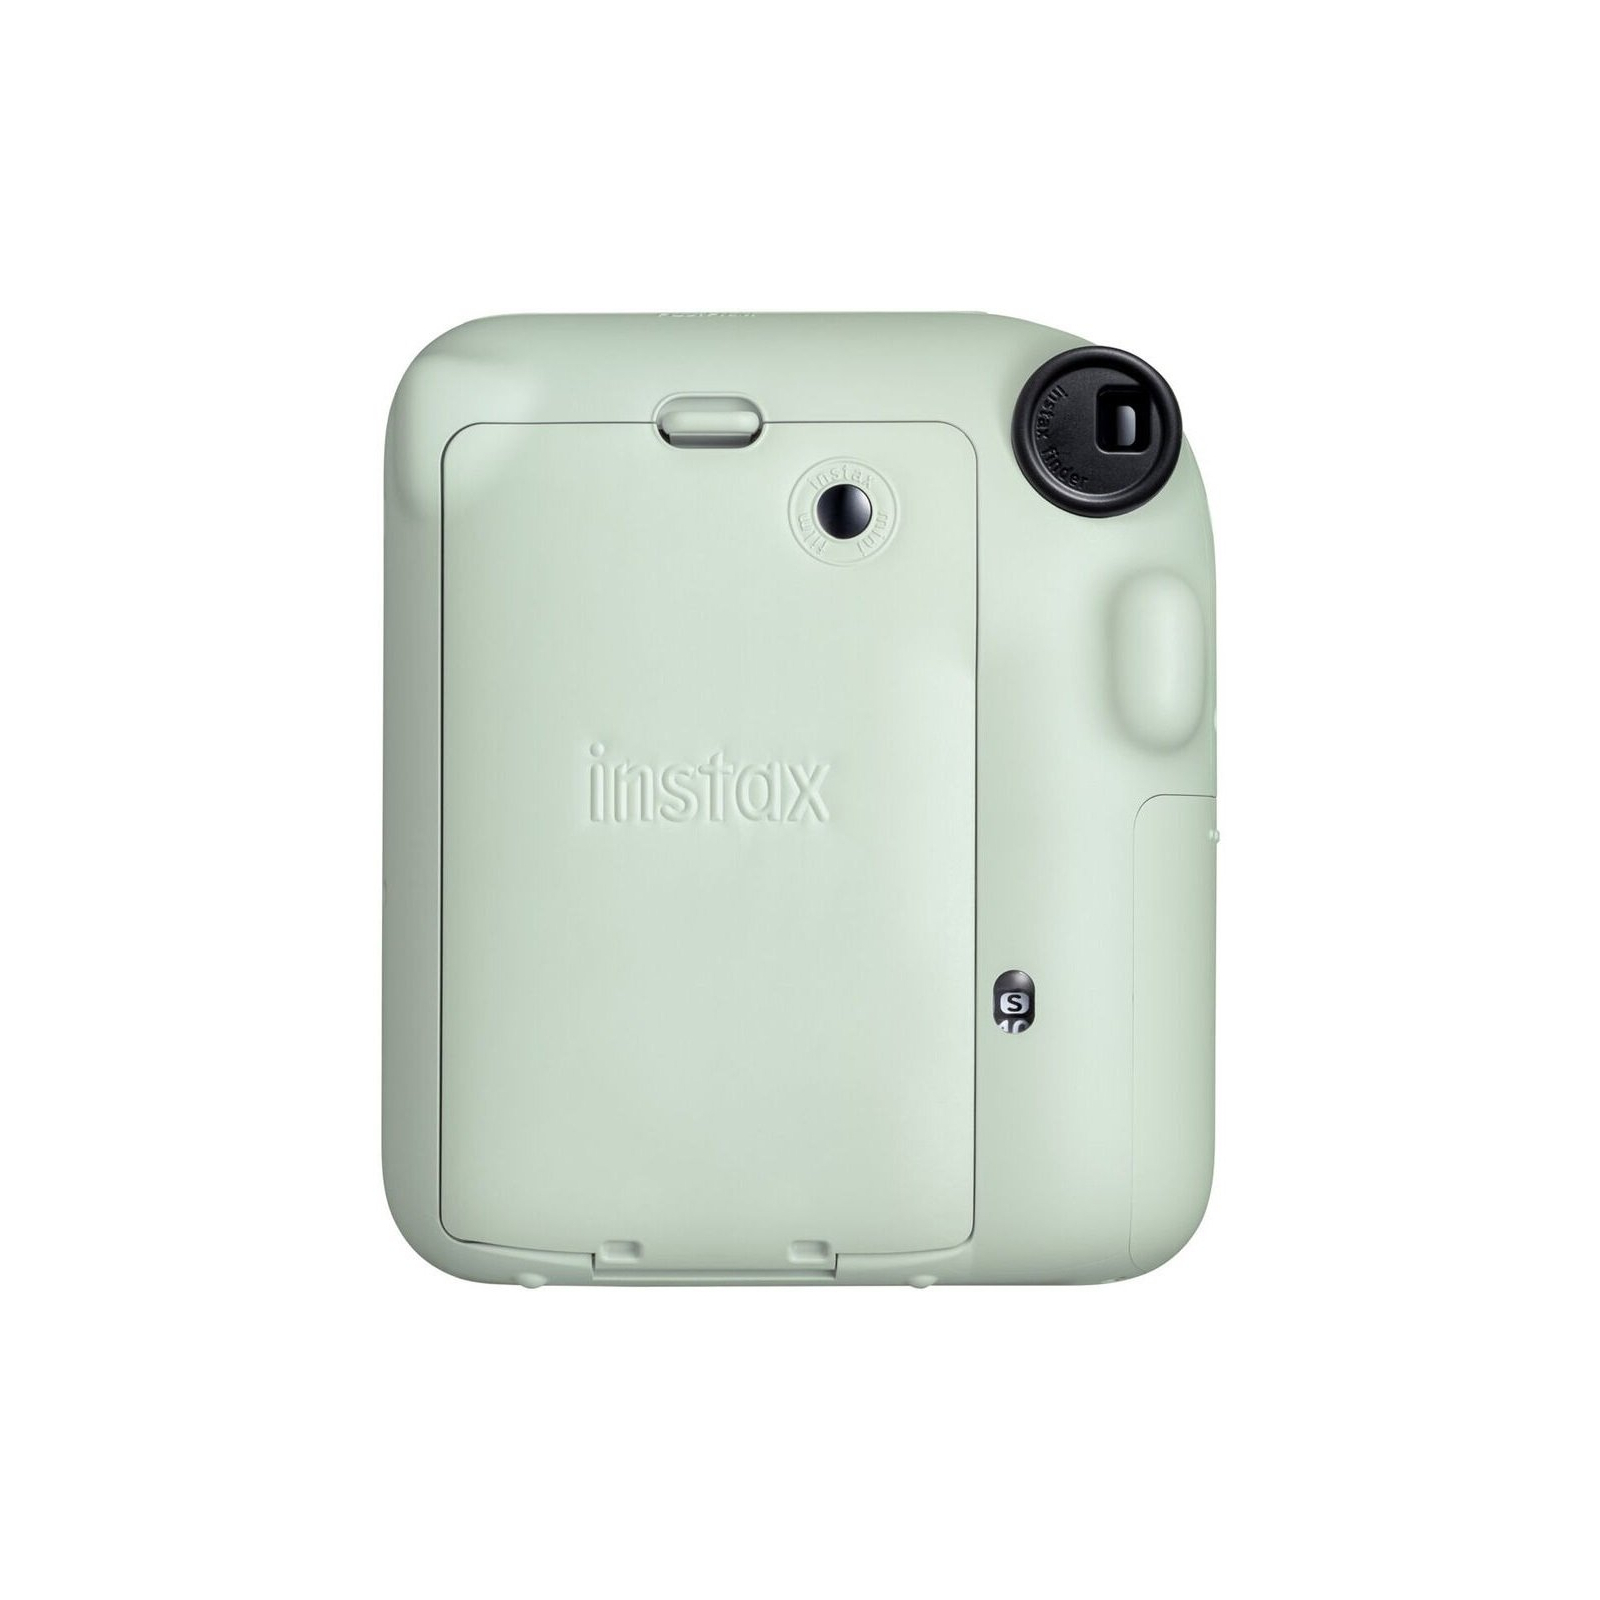 Камера моментальной печати Fujifilm INSTAX Mini 12 PURPLE (16806133) изображение 5